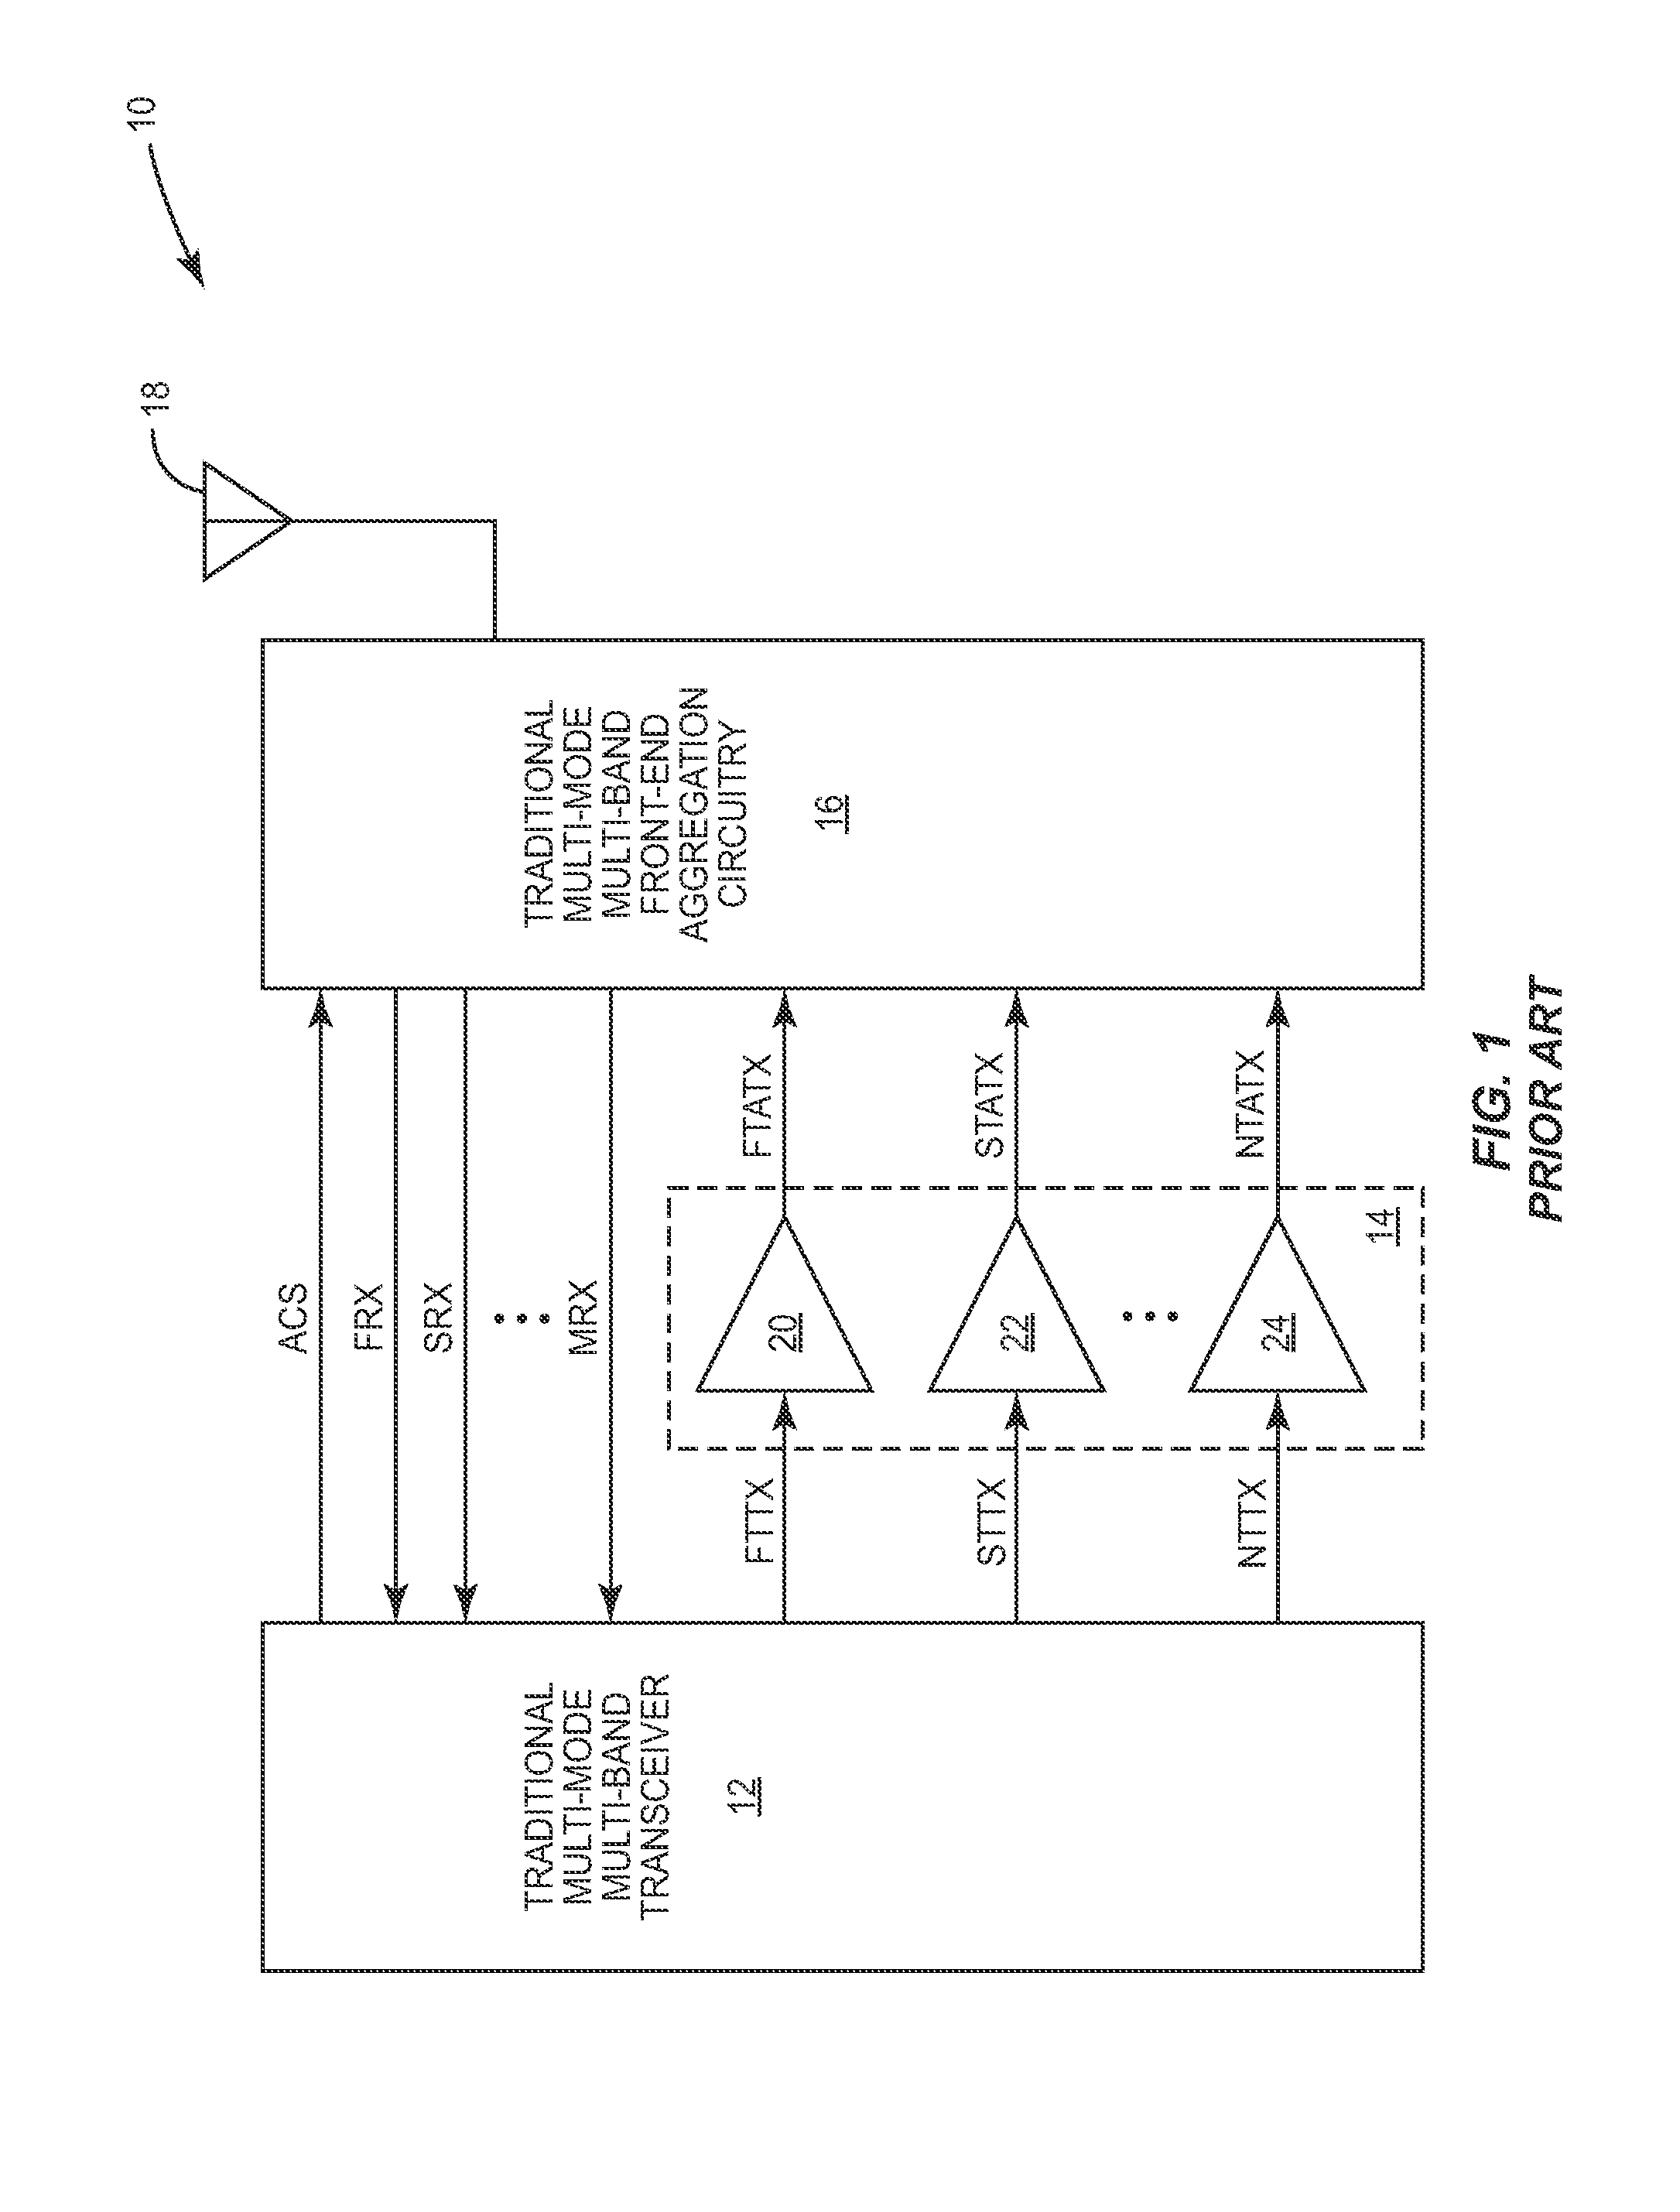 Dc-dc converter current sensing